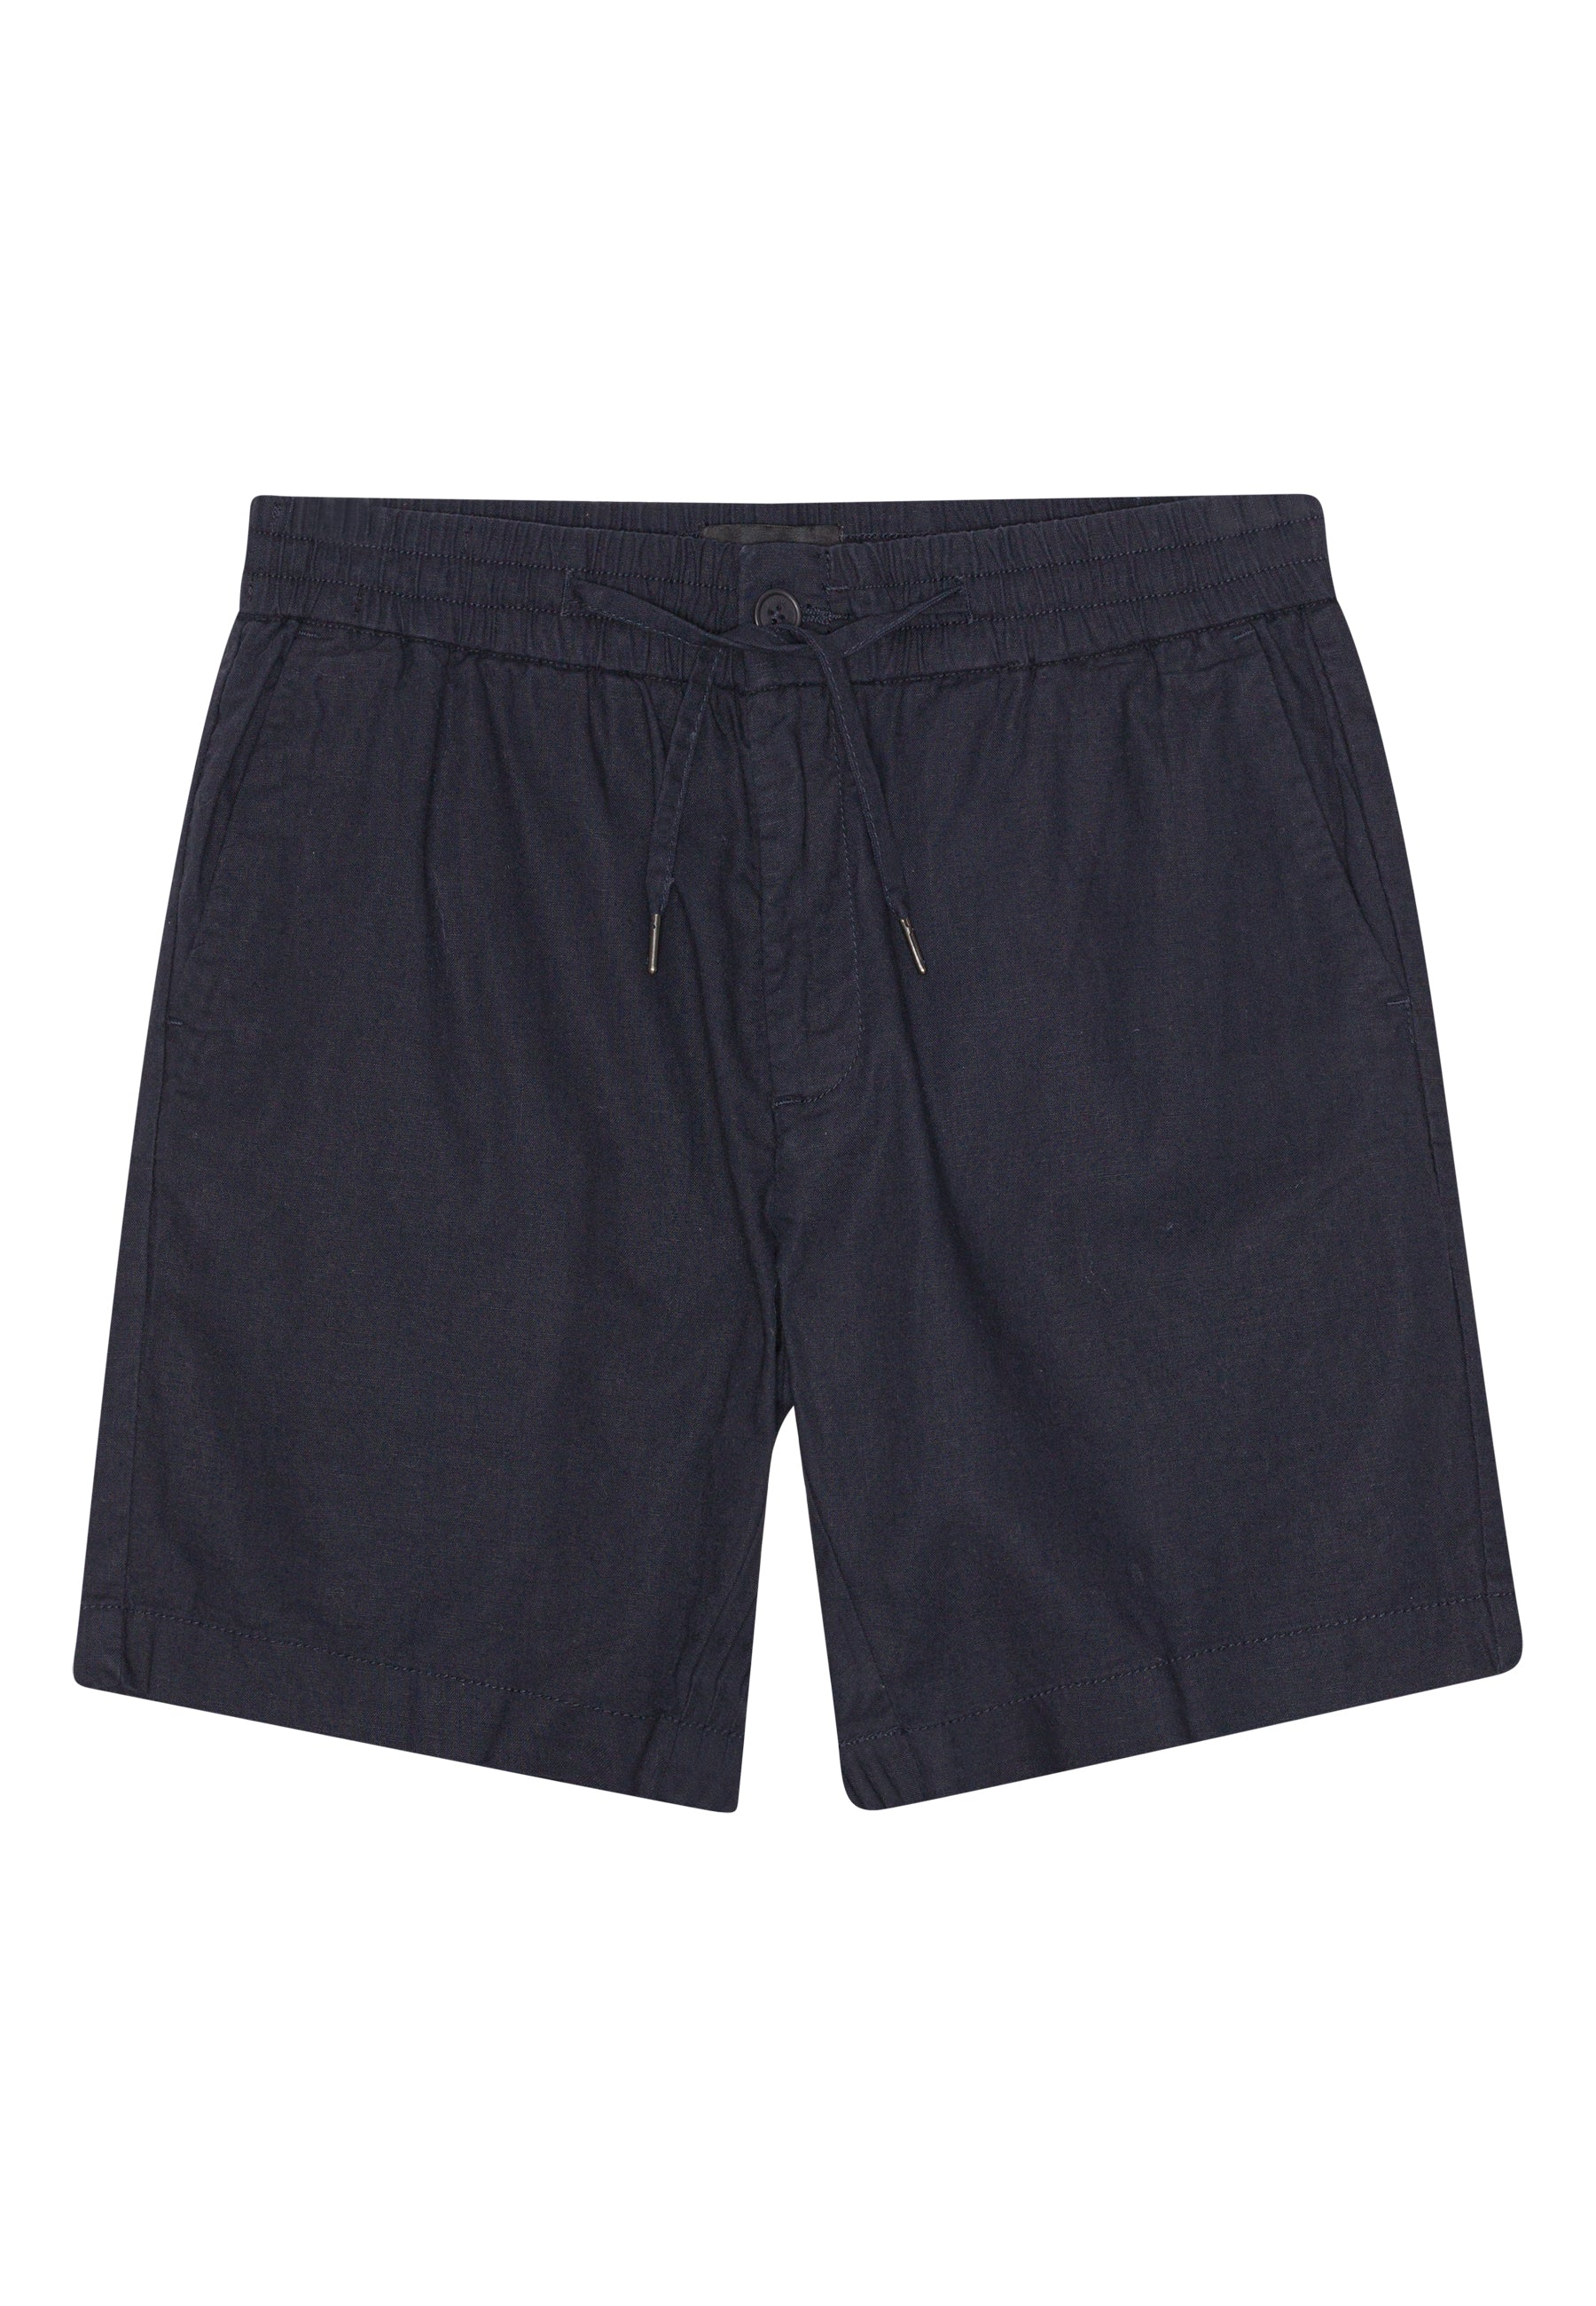 Barcelona Cotton / Linen Shorts - Navy